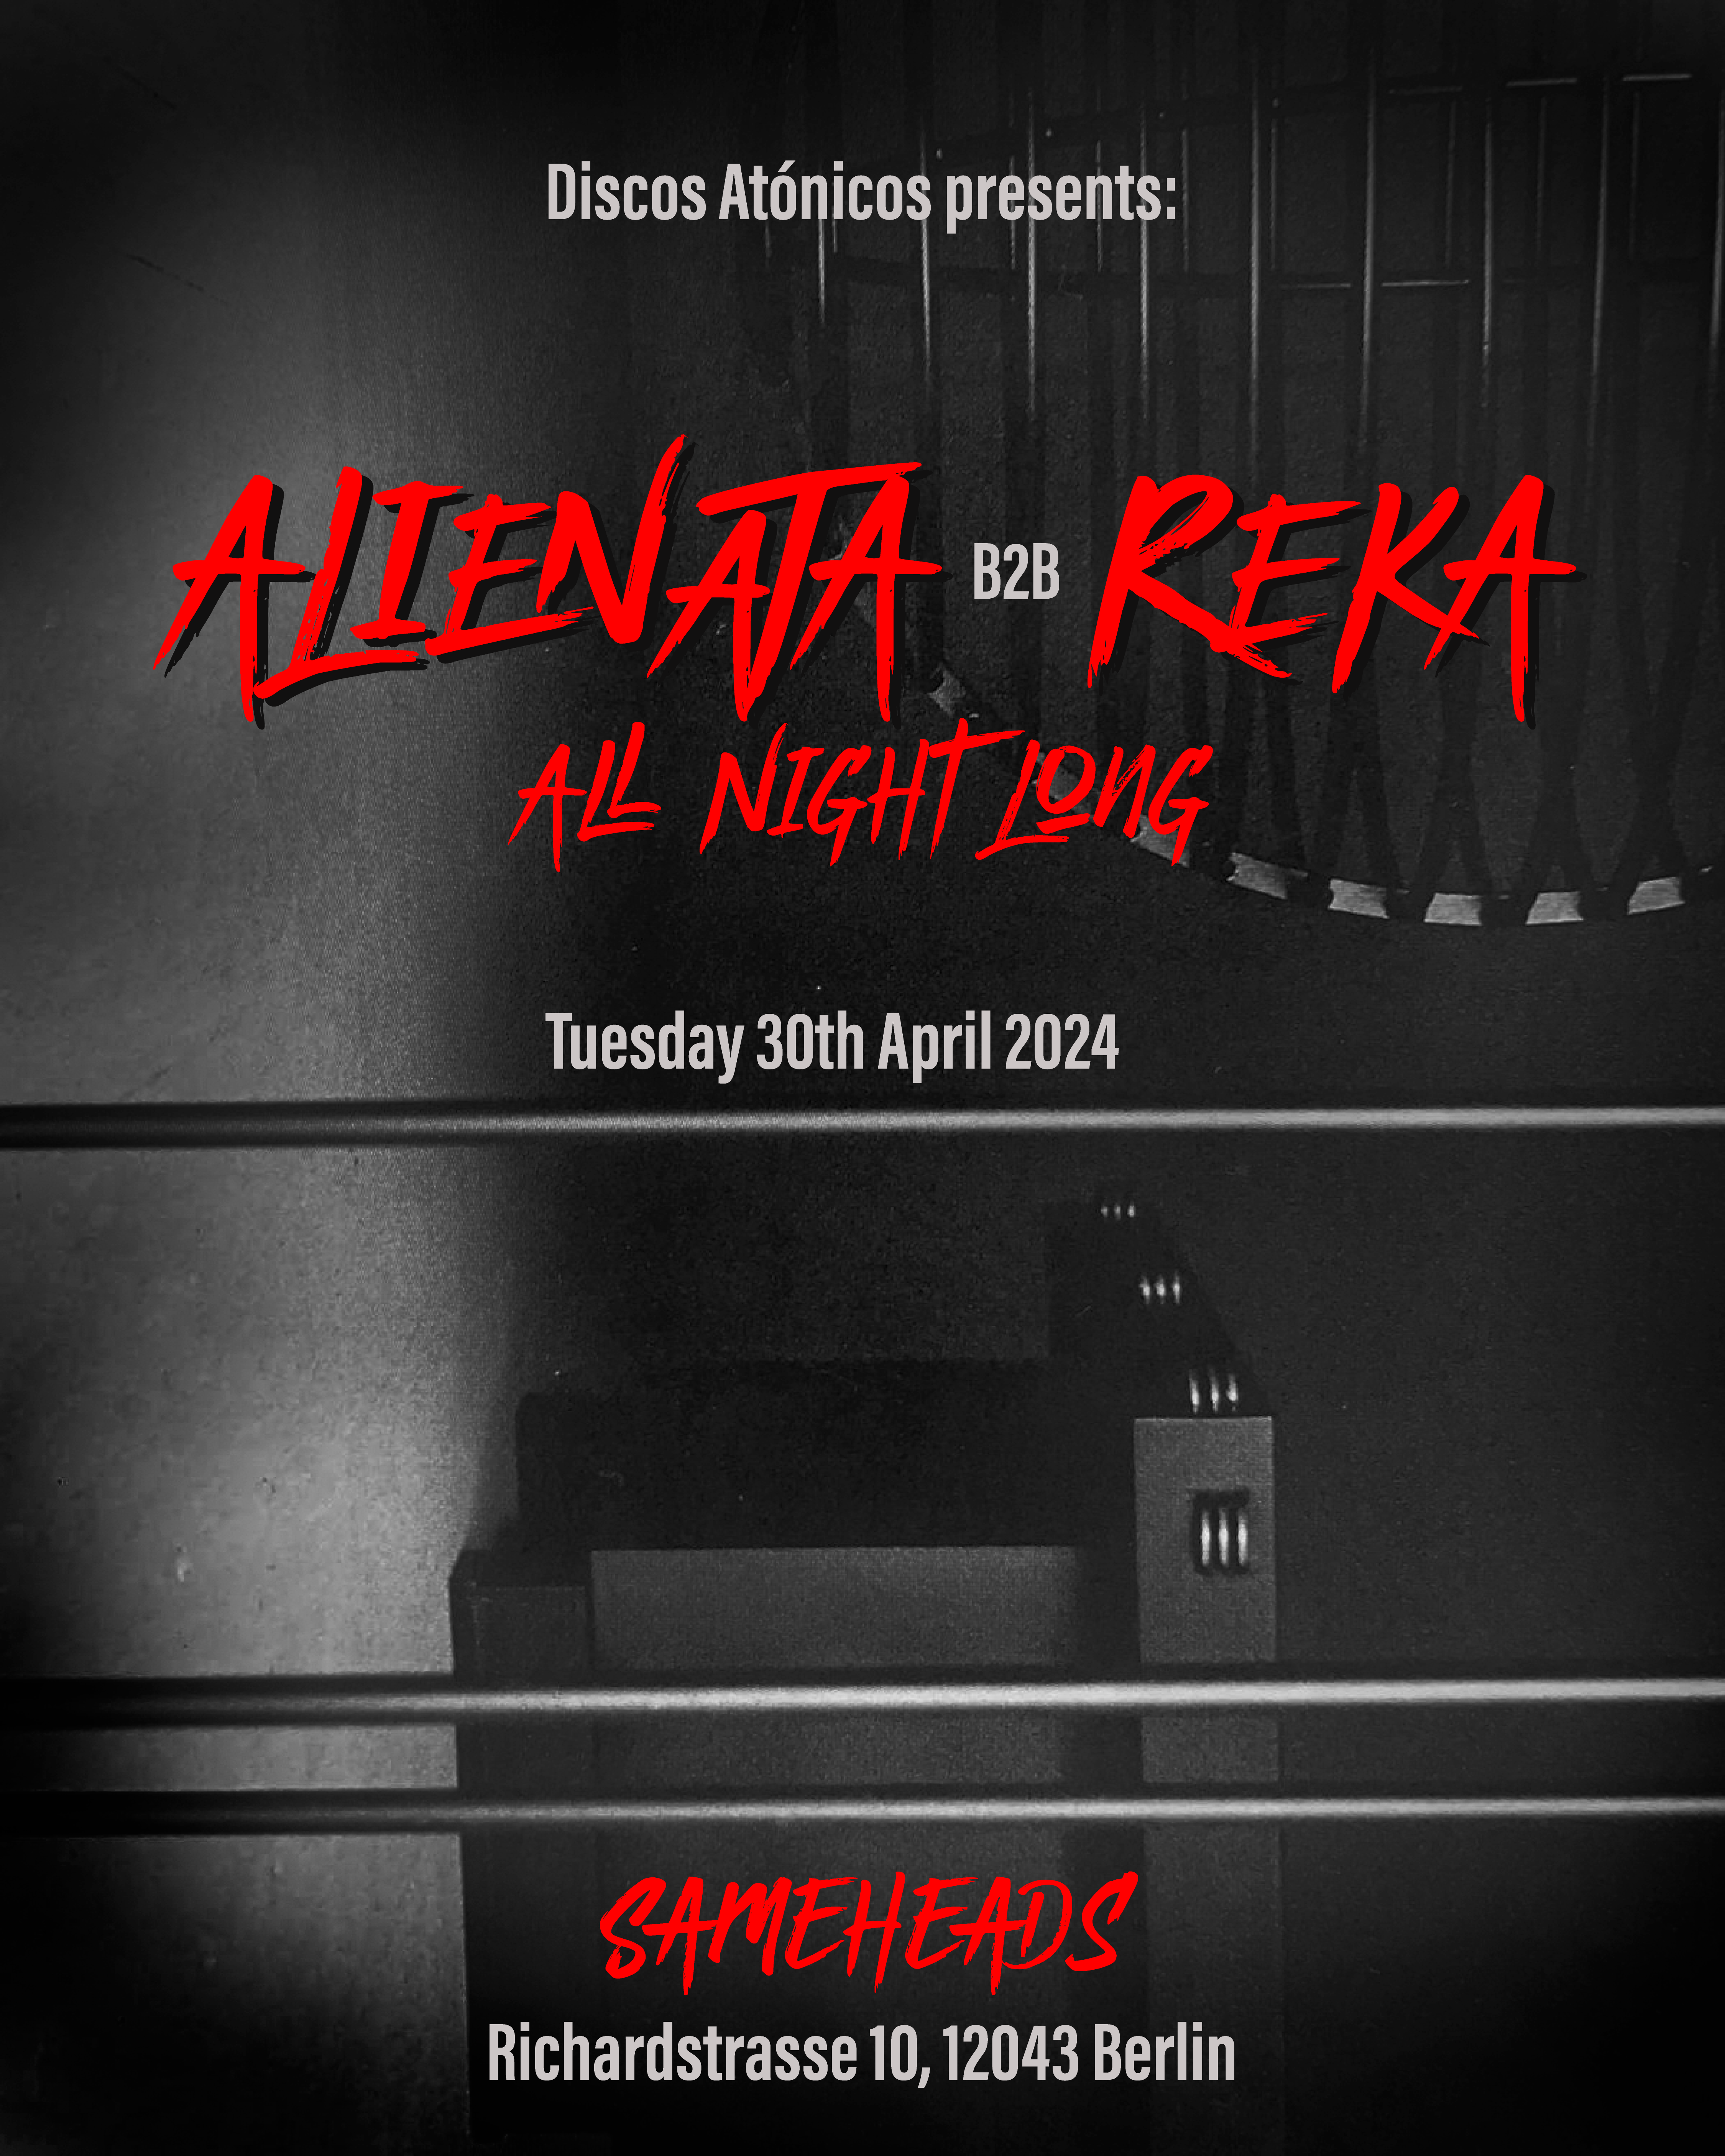 Discos Atónicos presents Alienata b2b Reka all night long - フライヤー表